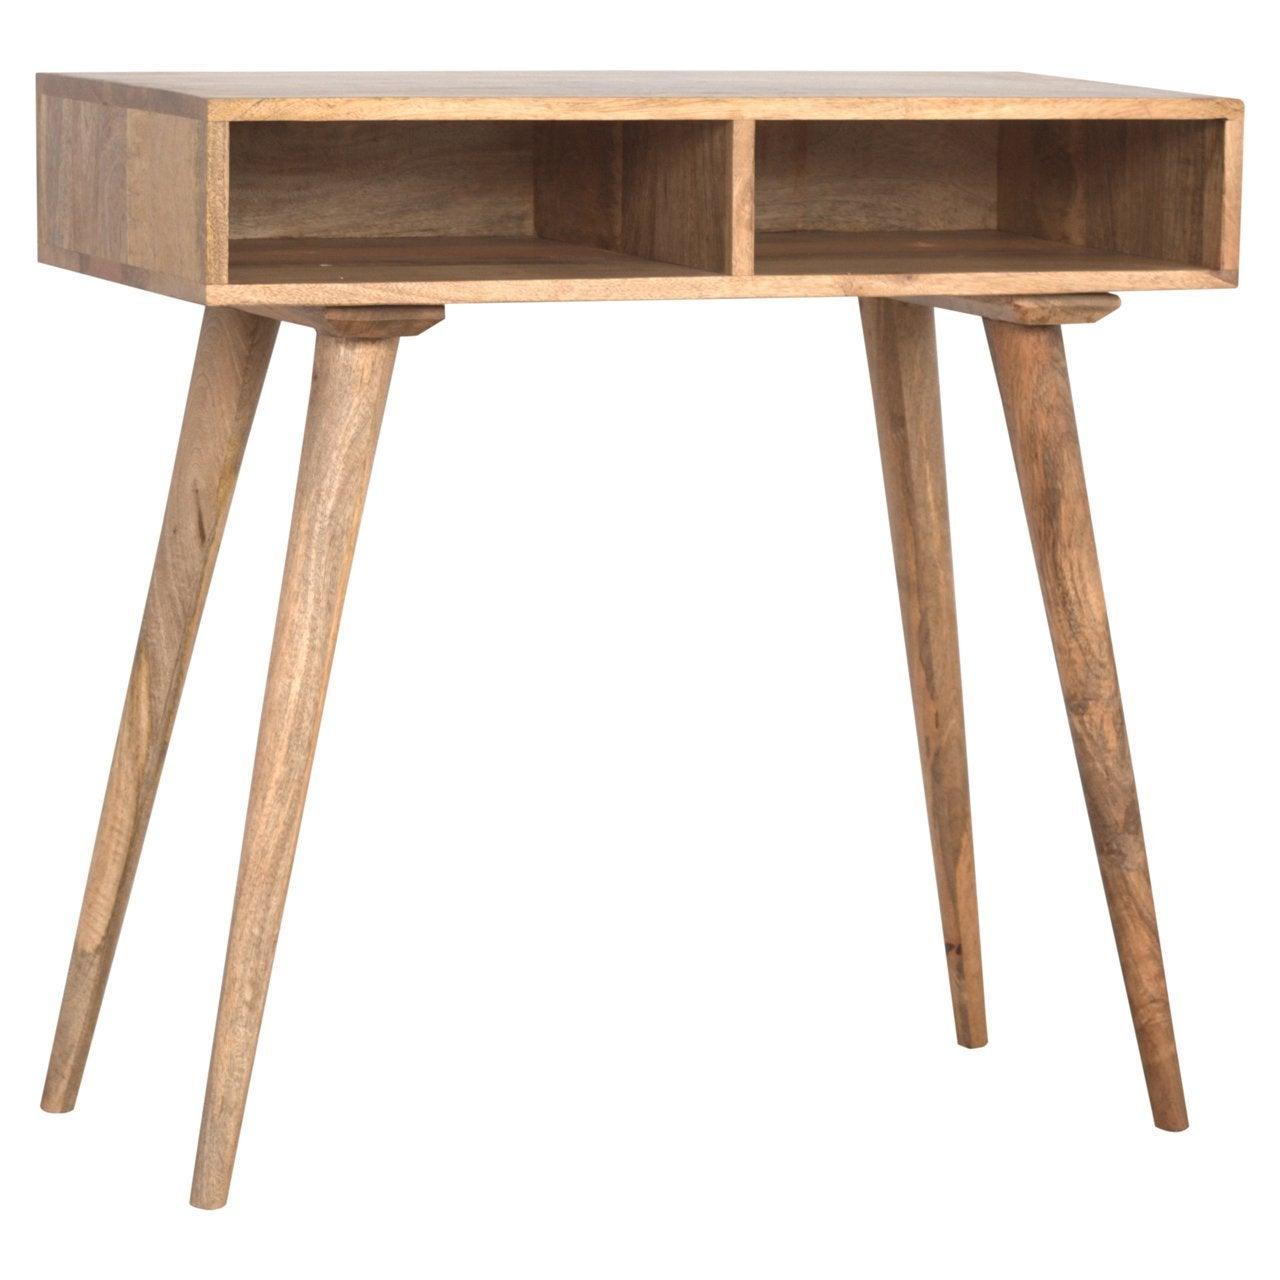 Nordic style open shelf writing desk - crimblefest furniture - image 4